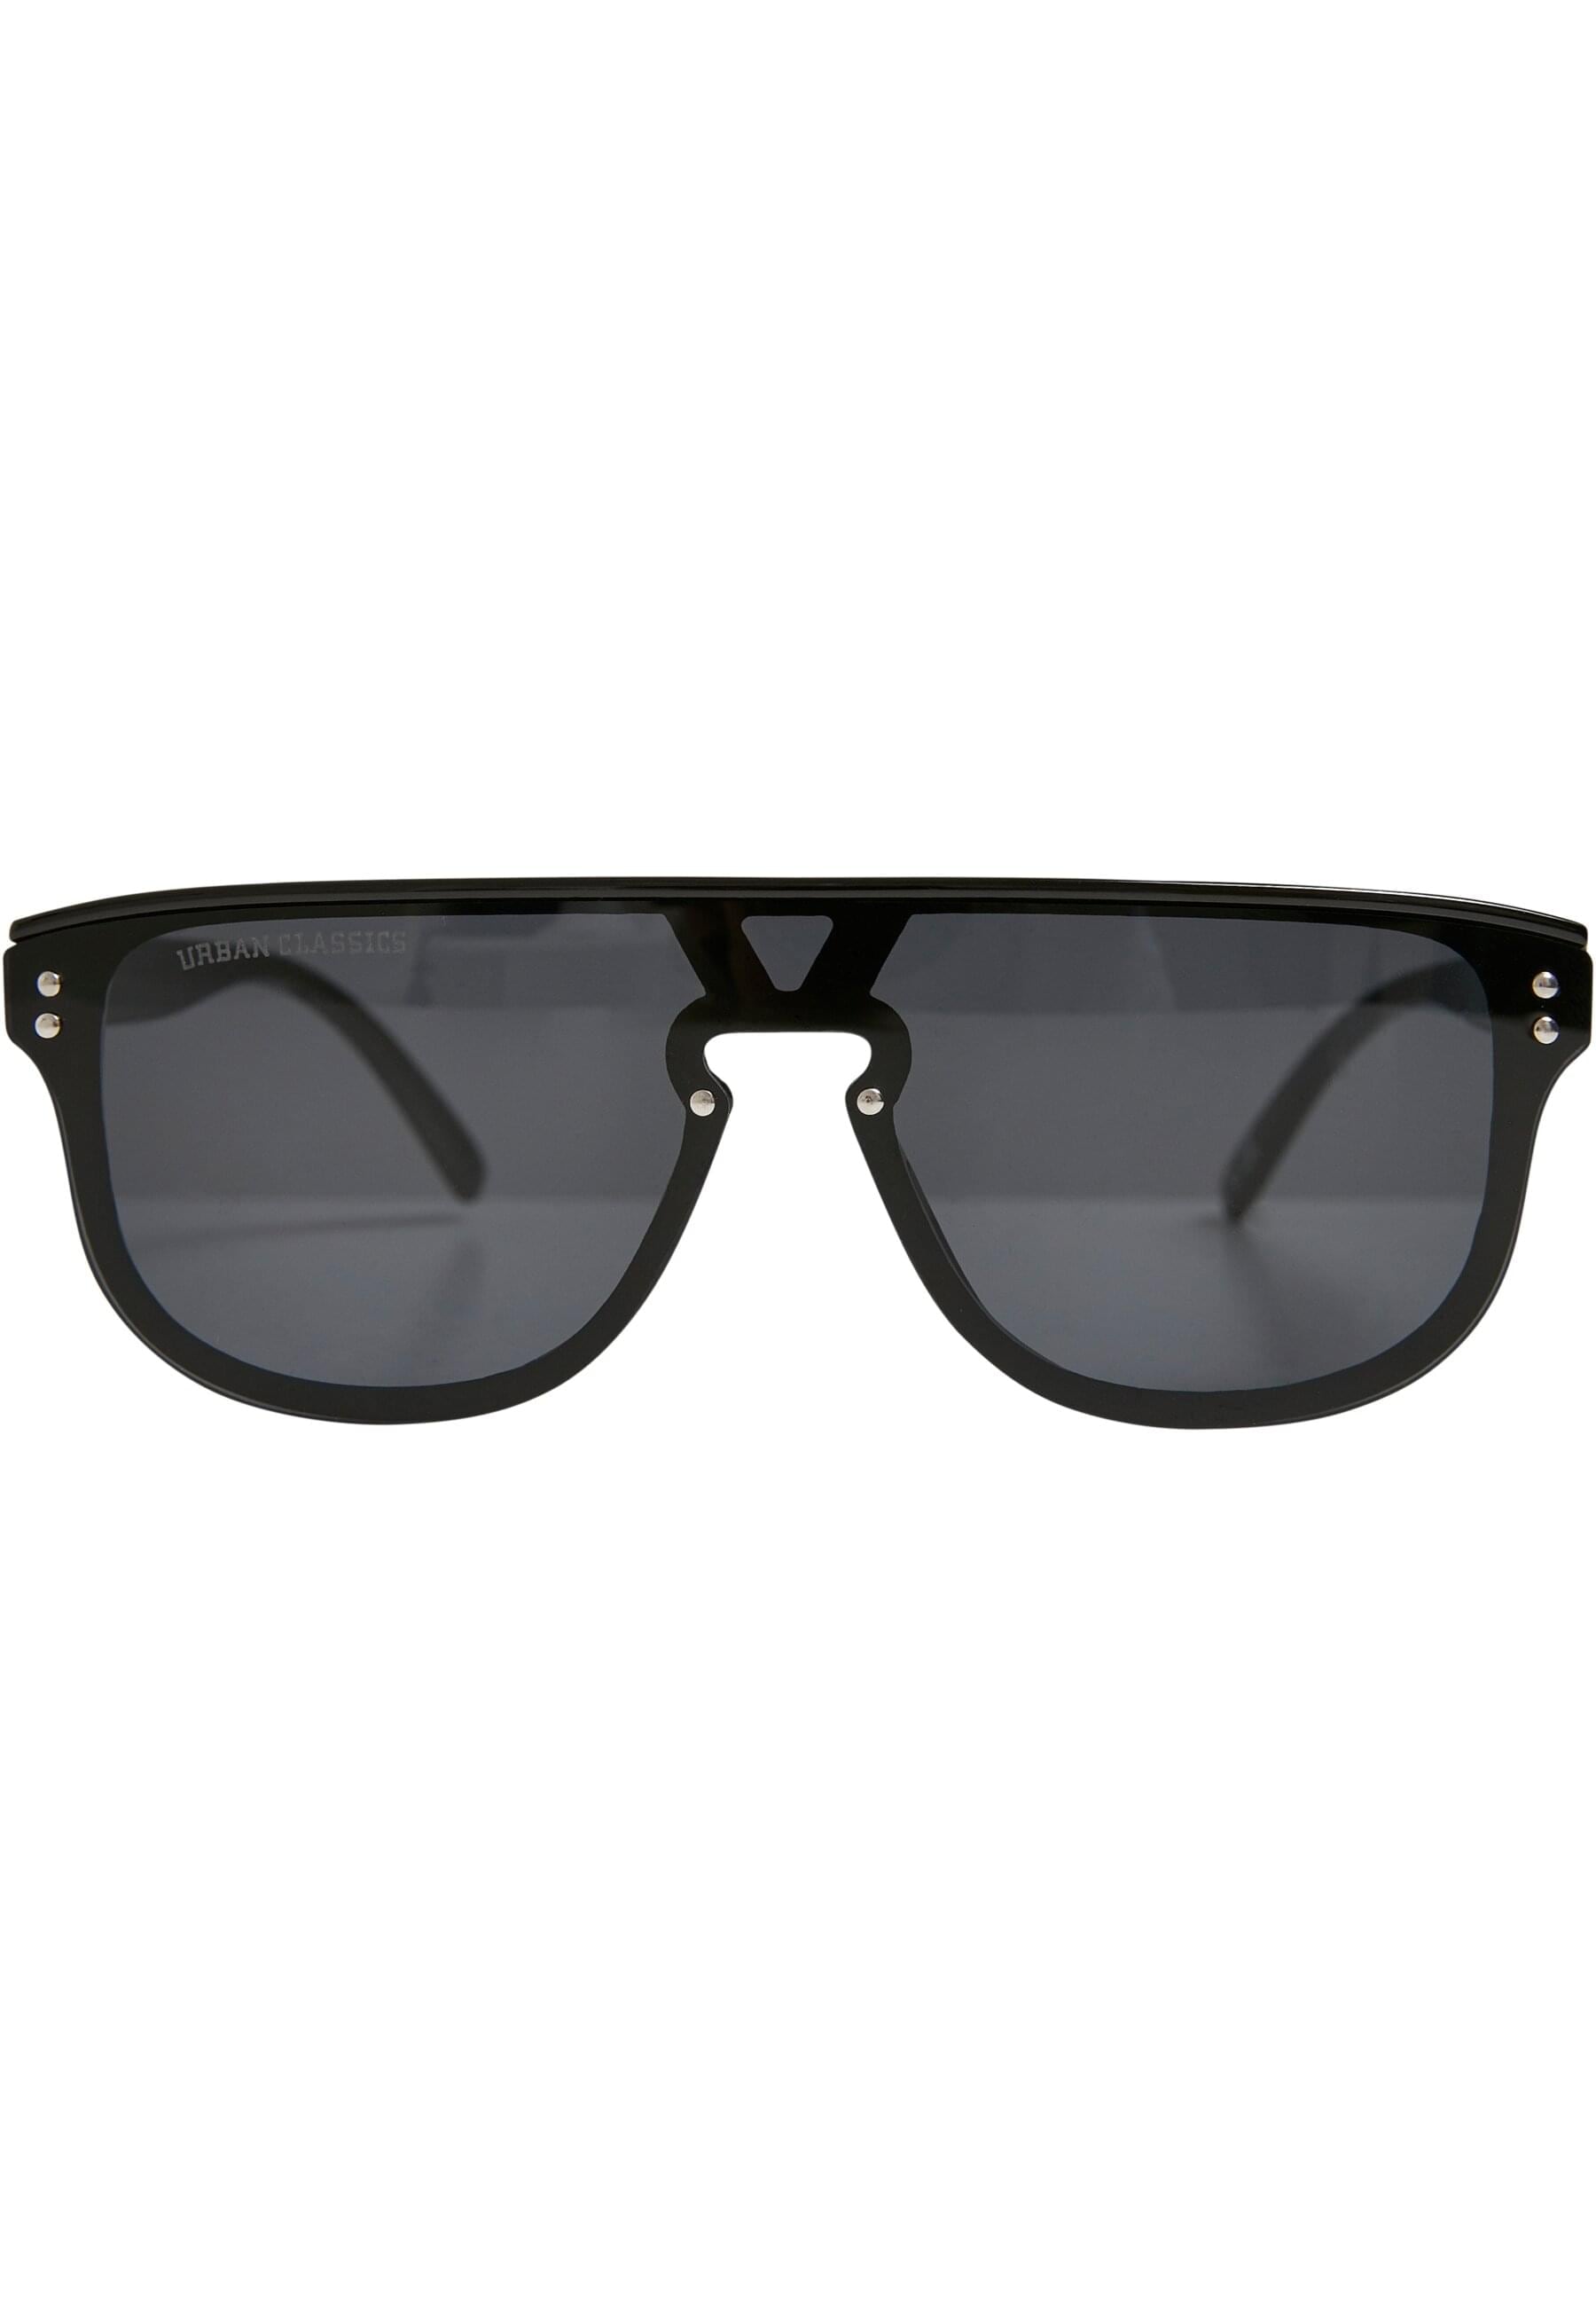 URBAN »Unisex CLASSICS Casablanca« Sunglasses | BAUR Sonnenbrille bestellen